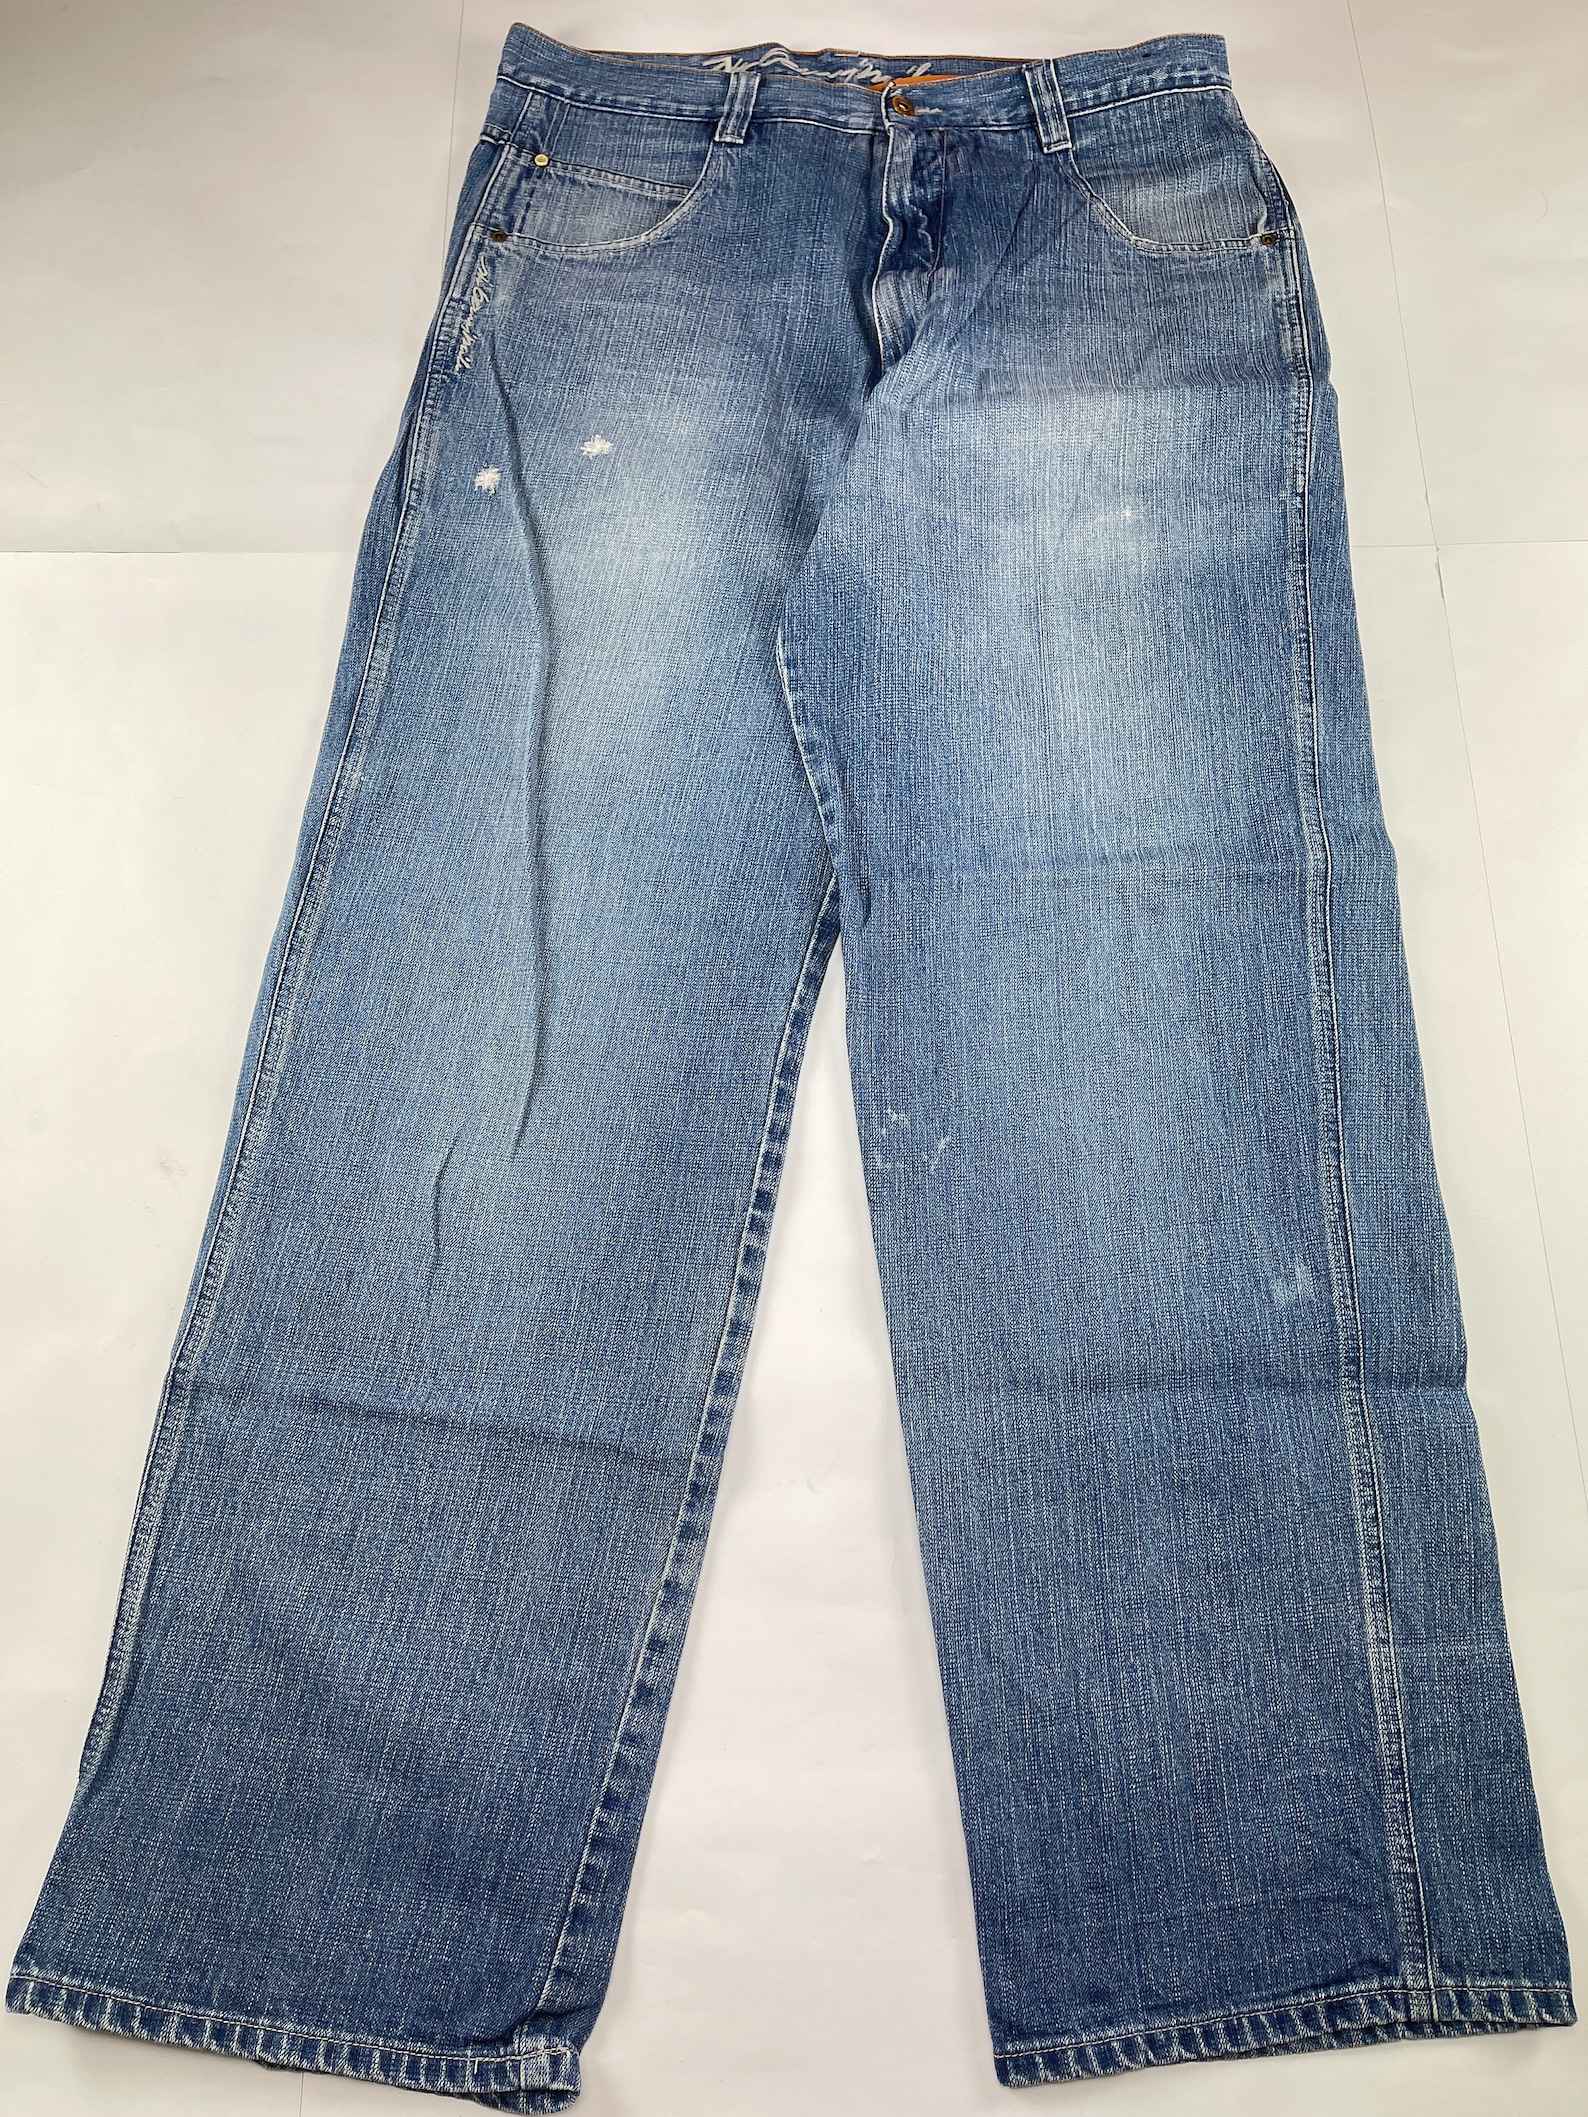 Sir Benni Miles jeans blue vintage baggy jeans 90s hip hop | Etsy